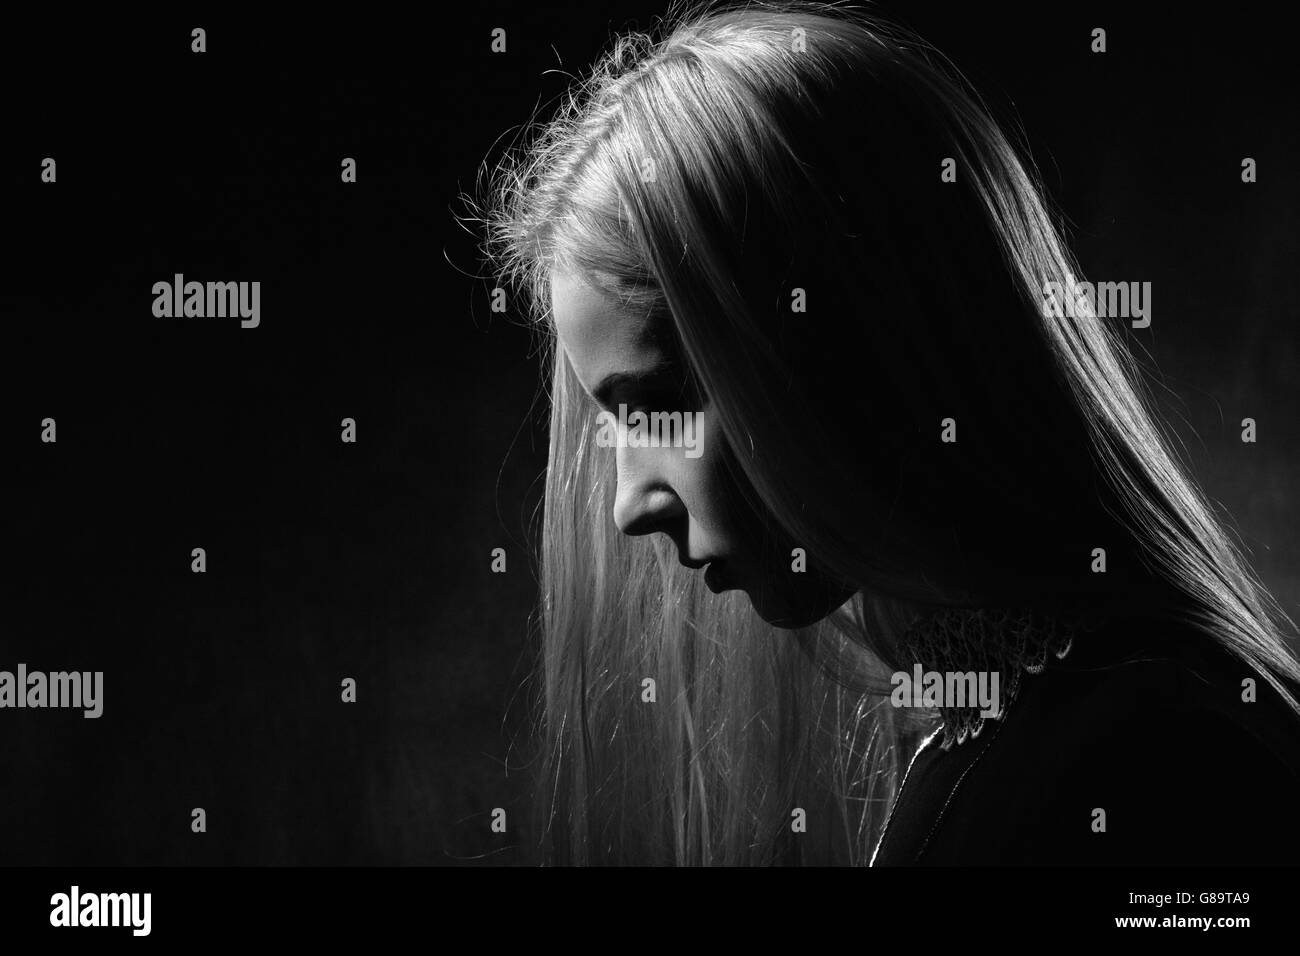 sad pensive girl profile on black background, monochrome image Stock Photo